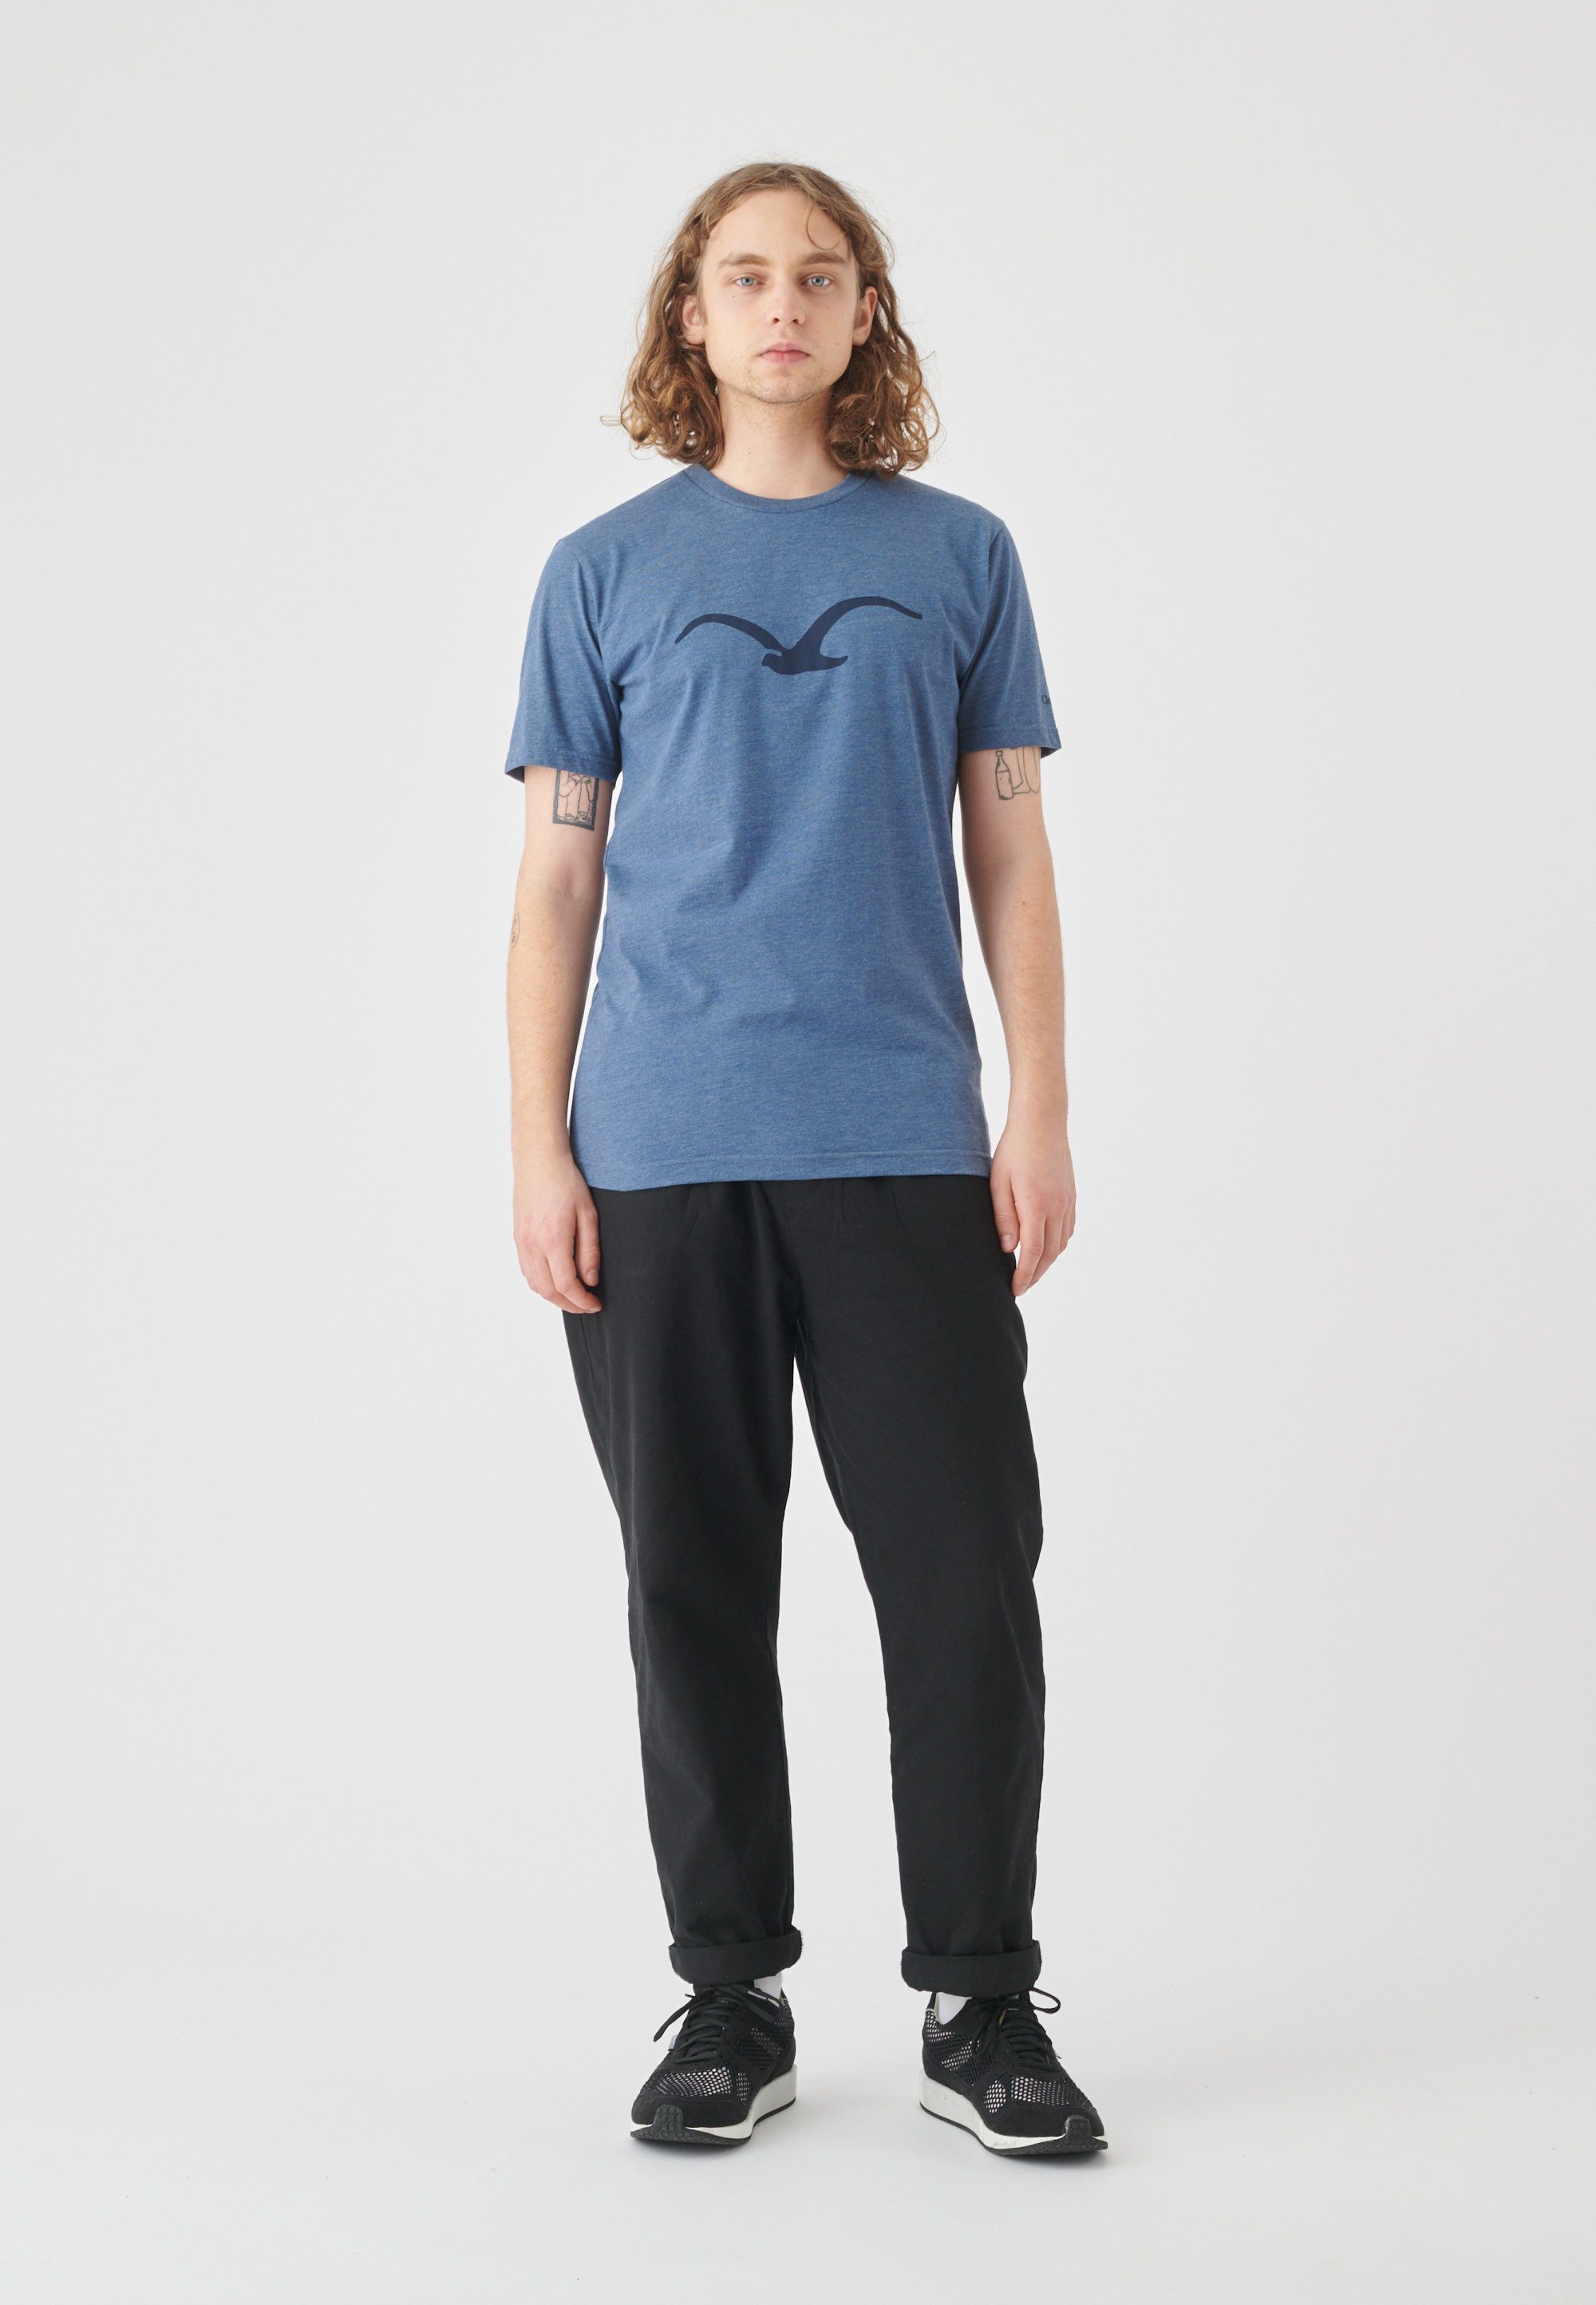 mit T-Shirt klassischem Mowe blau-blau Print Cleptomanicx